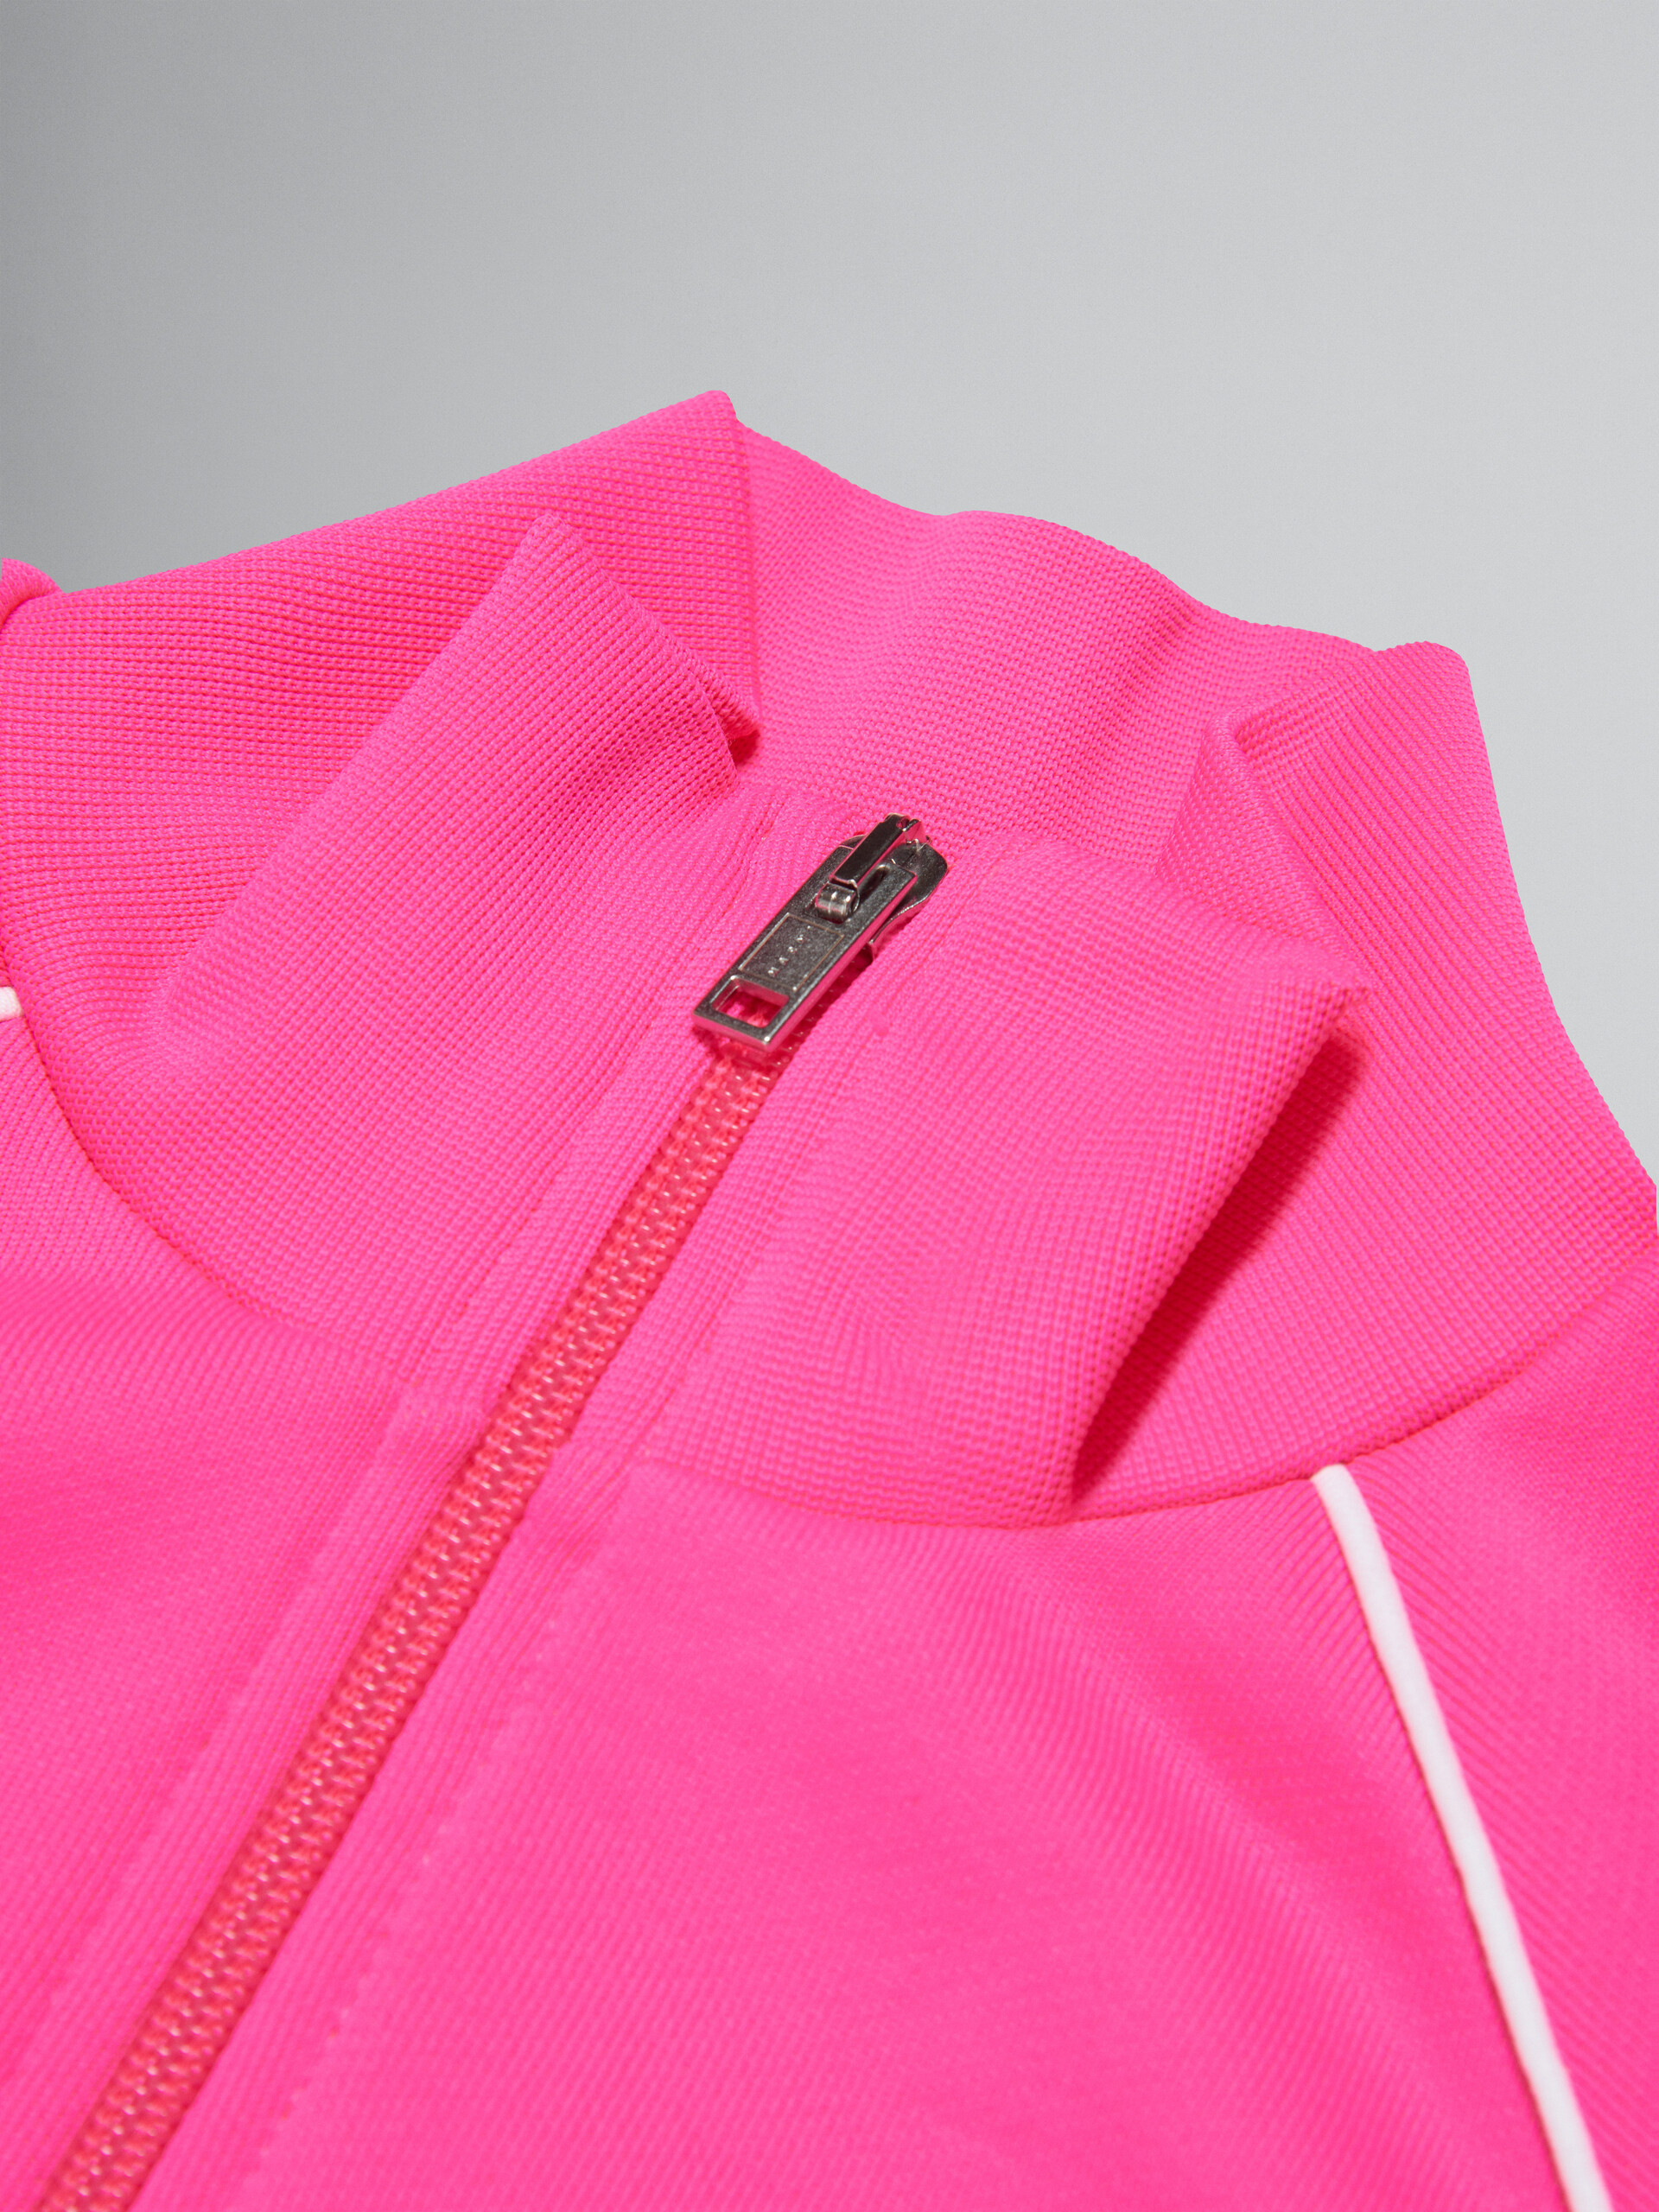 Sweat-shirt en tissu technique rose avec logo Brush - Maille - Image 4